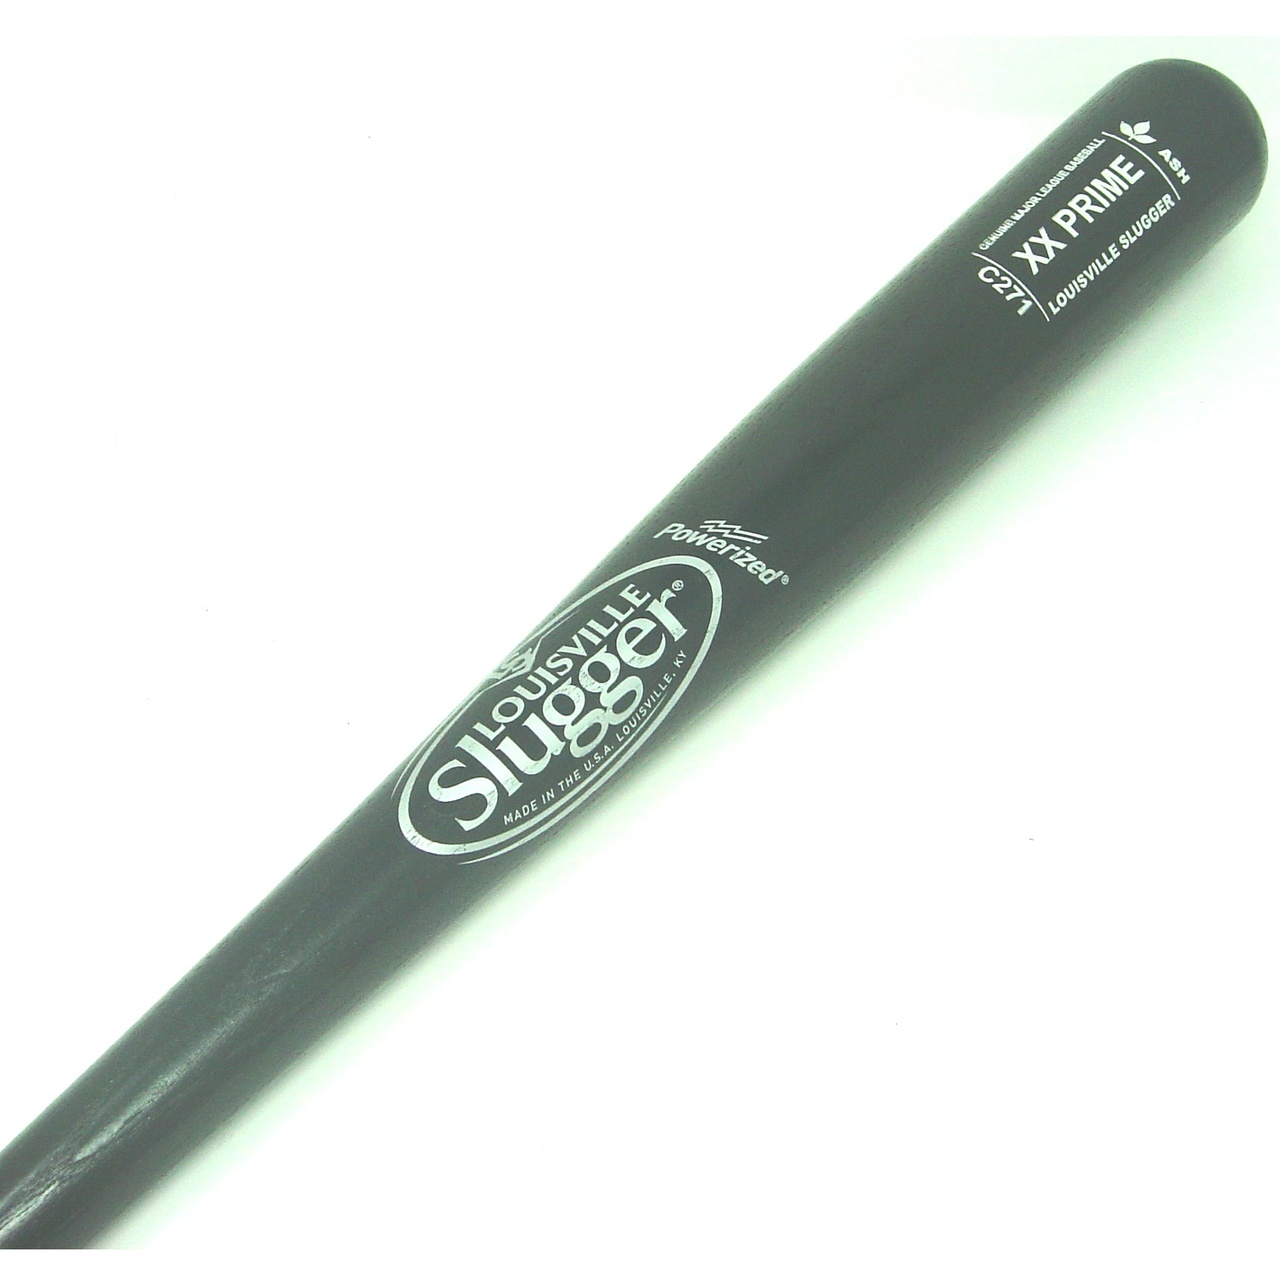 louisville-slugger-xx-prime-ash-pro-c271-not-cupped-wood-baseball-bat-34 WBXA14P71NBK34 Louisville  Classic Louisville Slugger wood baseball bat sold to the Major League